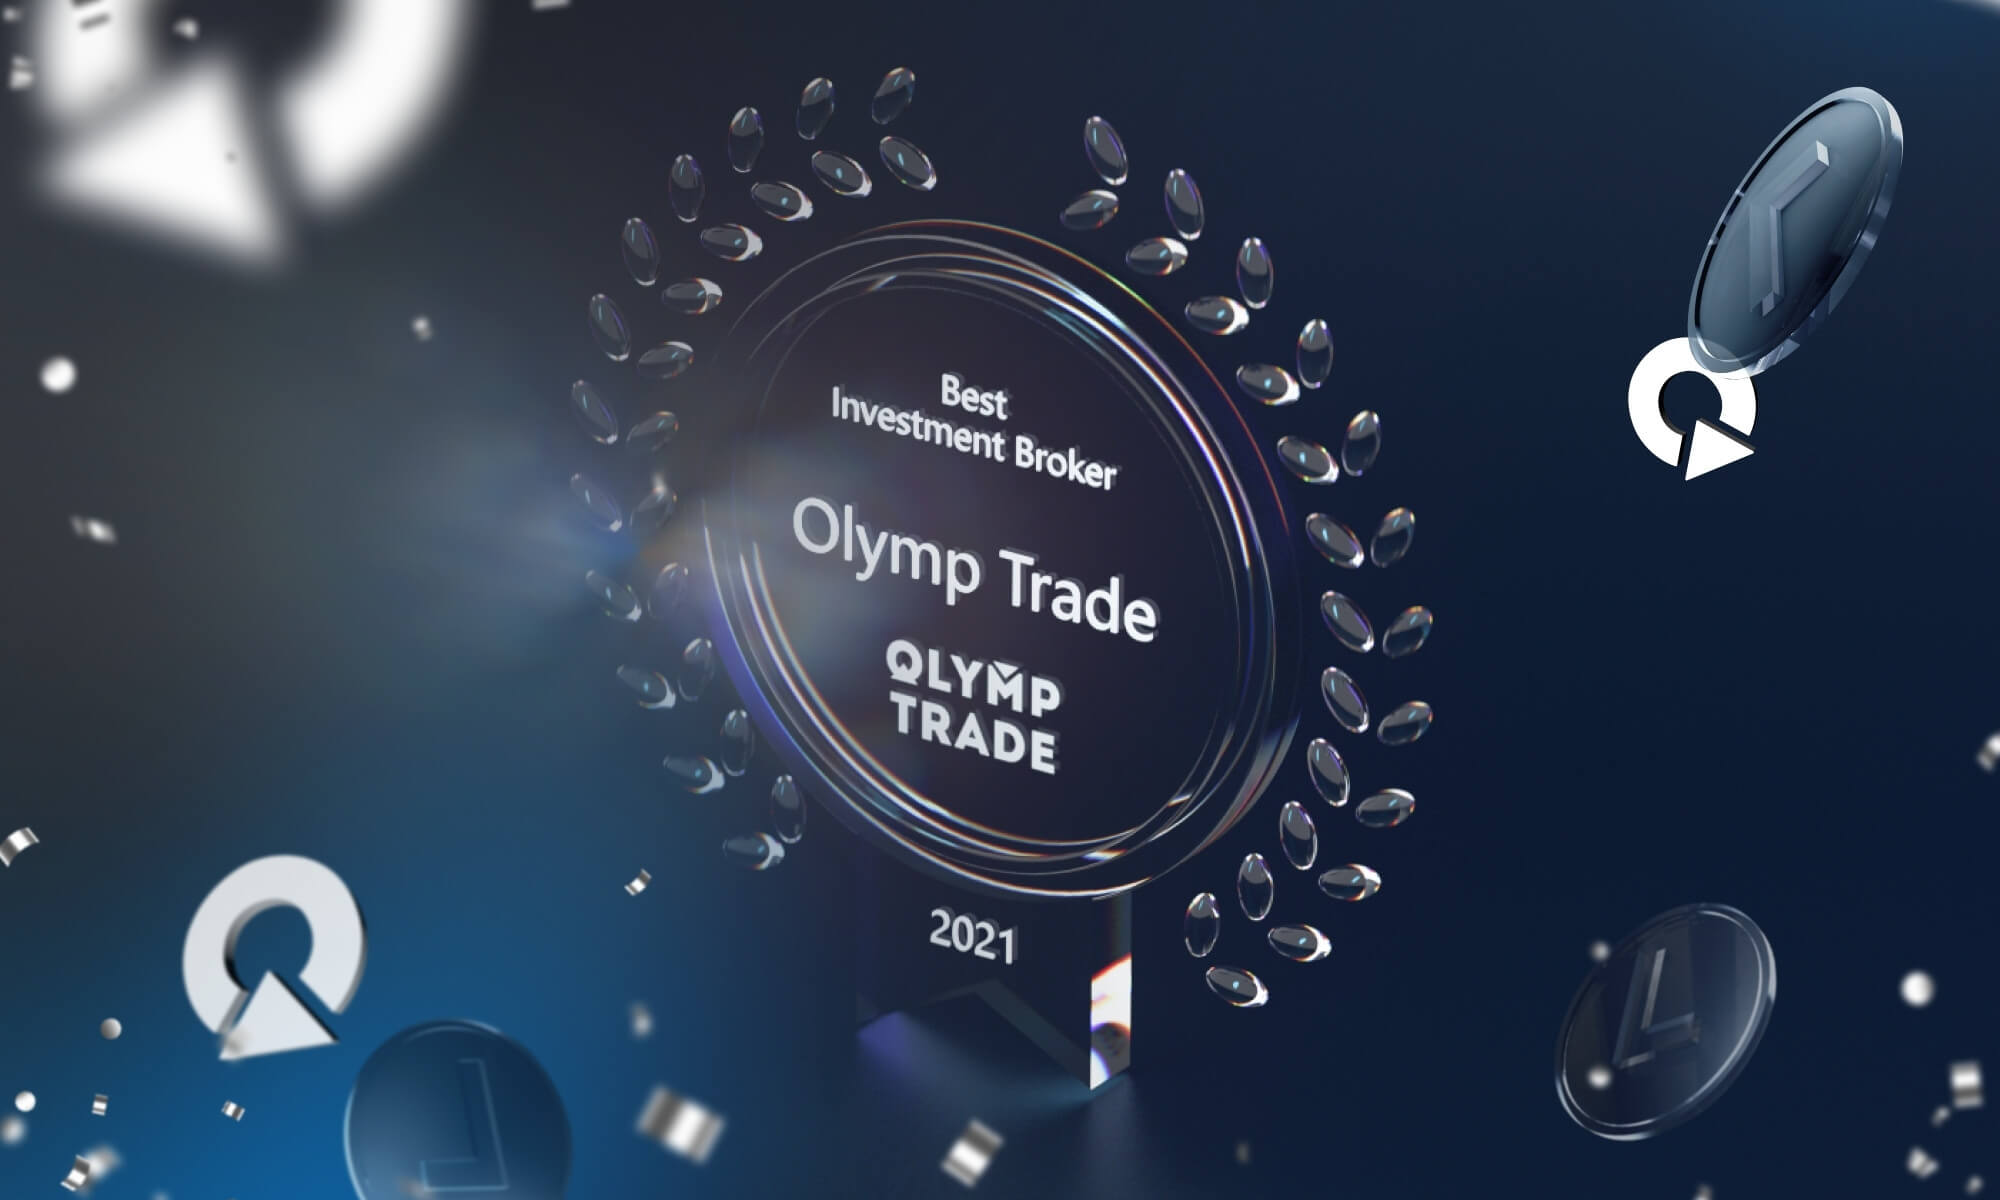 olymp trade best investment broker